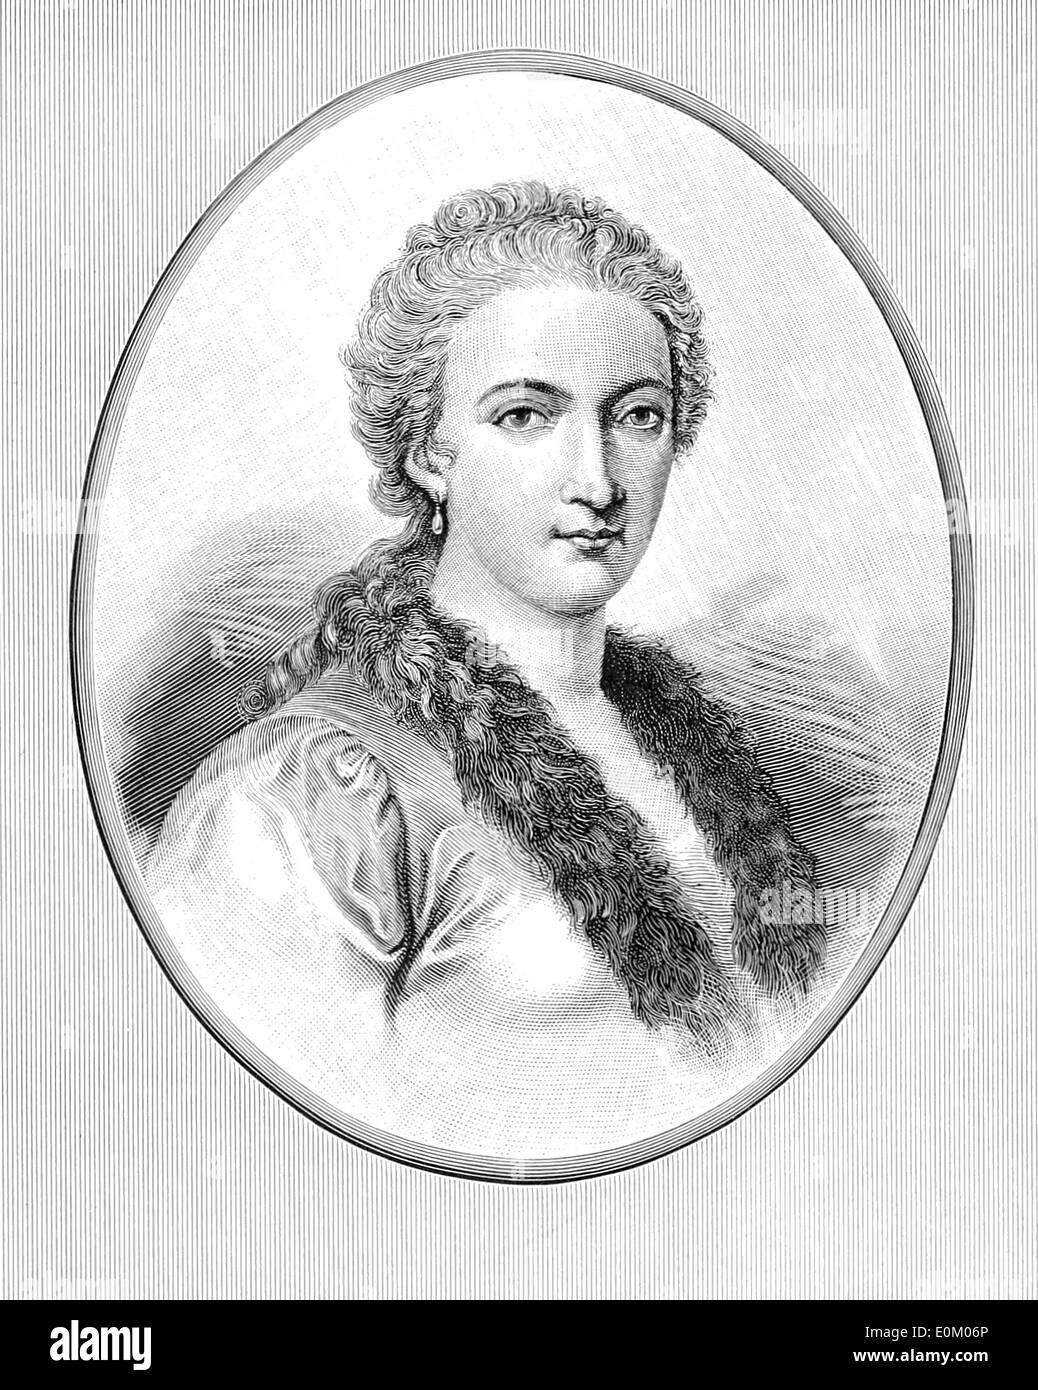 Maria Gaetana Agnesi, italienischer Mathematiker und Philosoph. Stockfoto